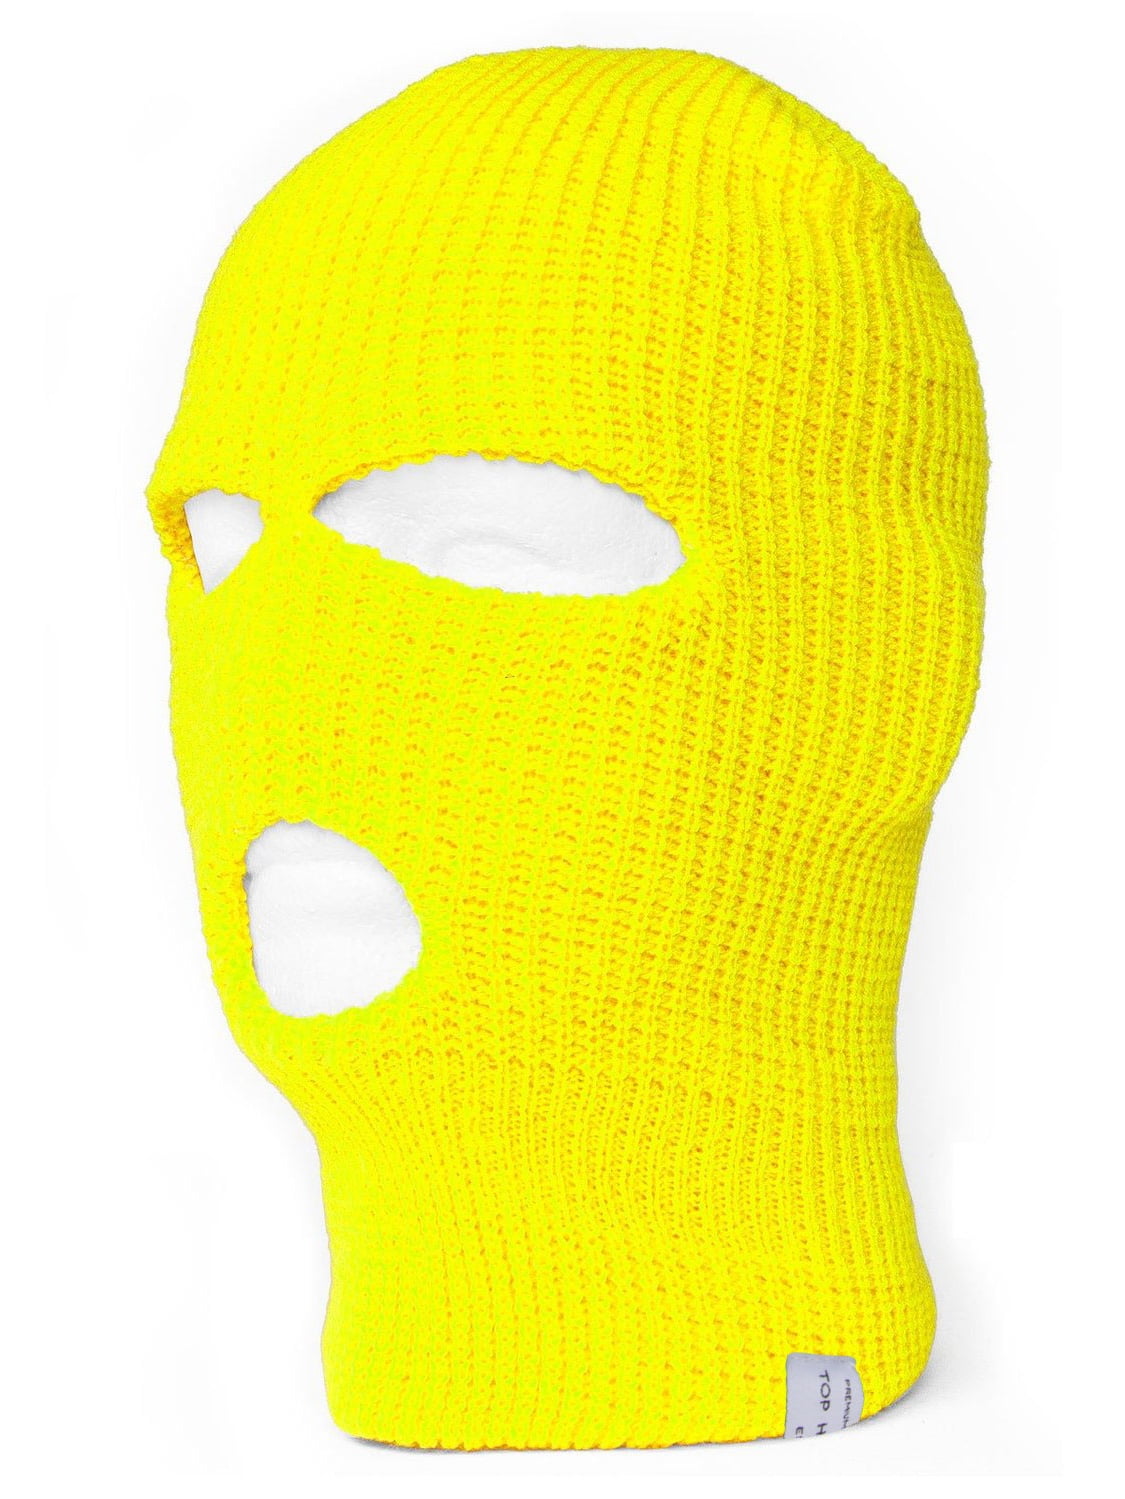 TopHeadwear 3-Hole Ski Face Mask Balaclava - Walmart.com